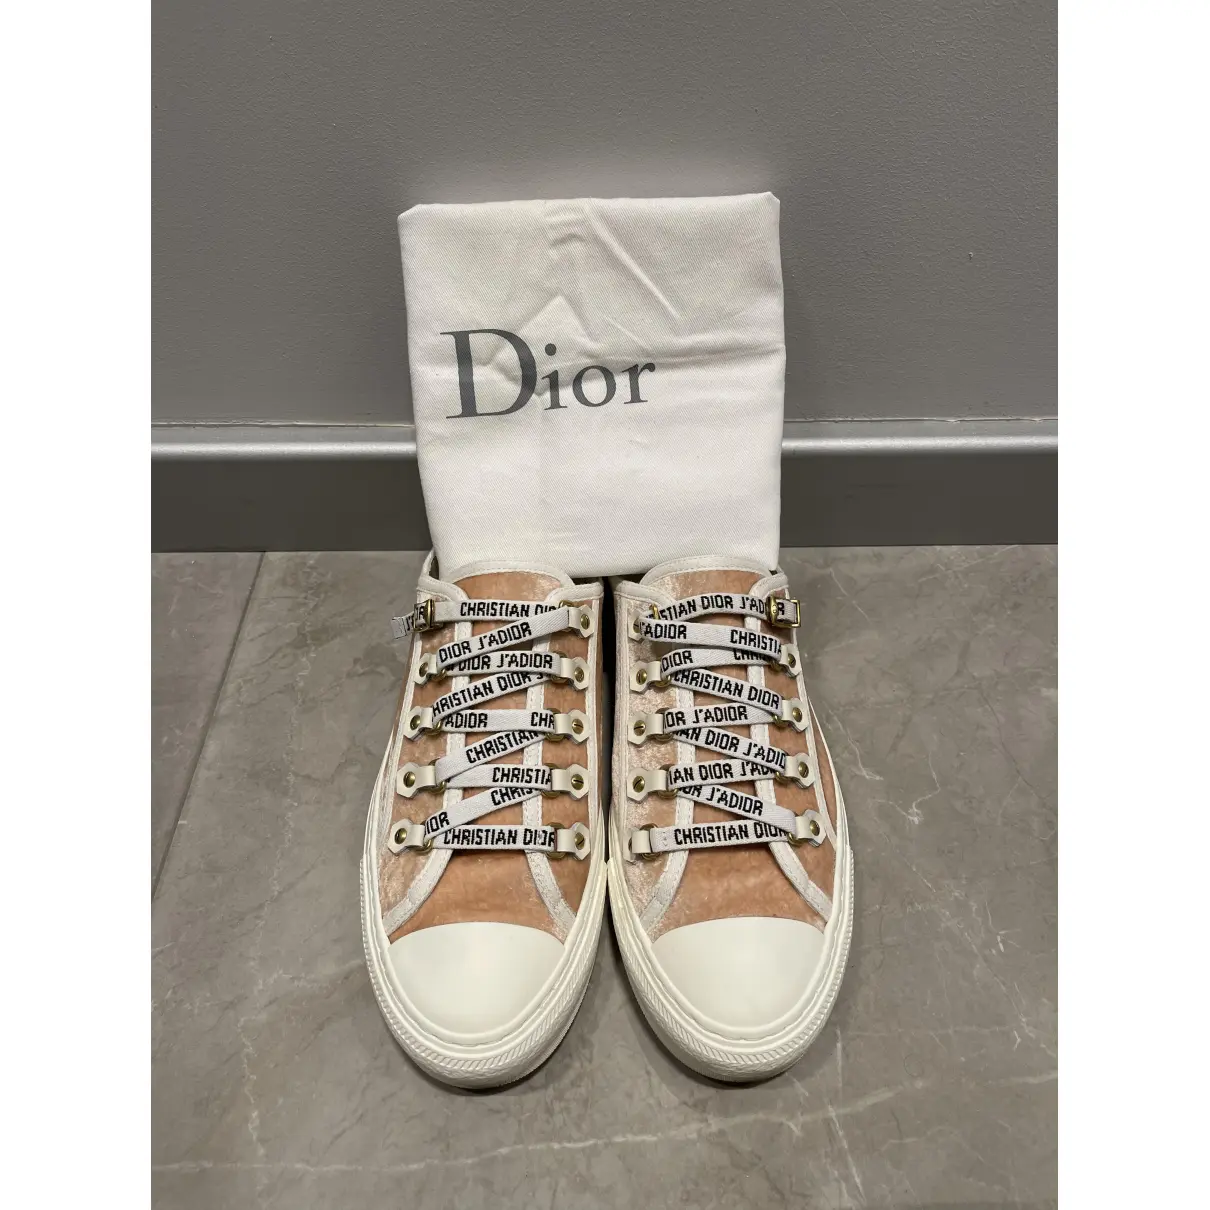 Buy Dior Walk 'n' Dior velvet trainers online